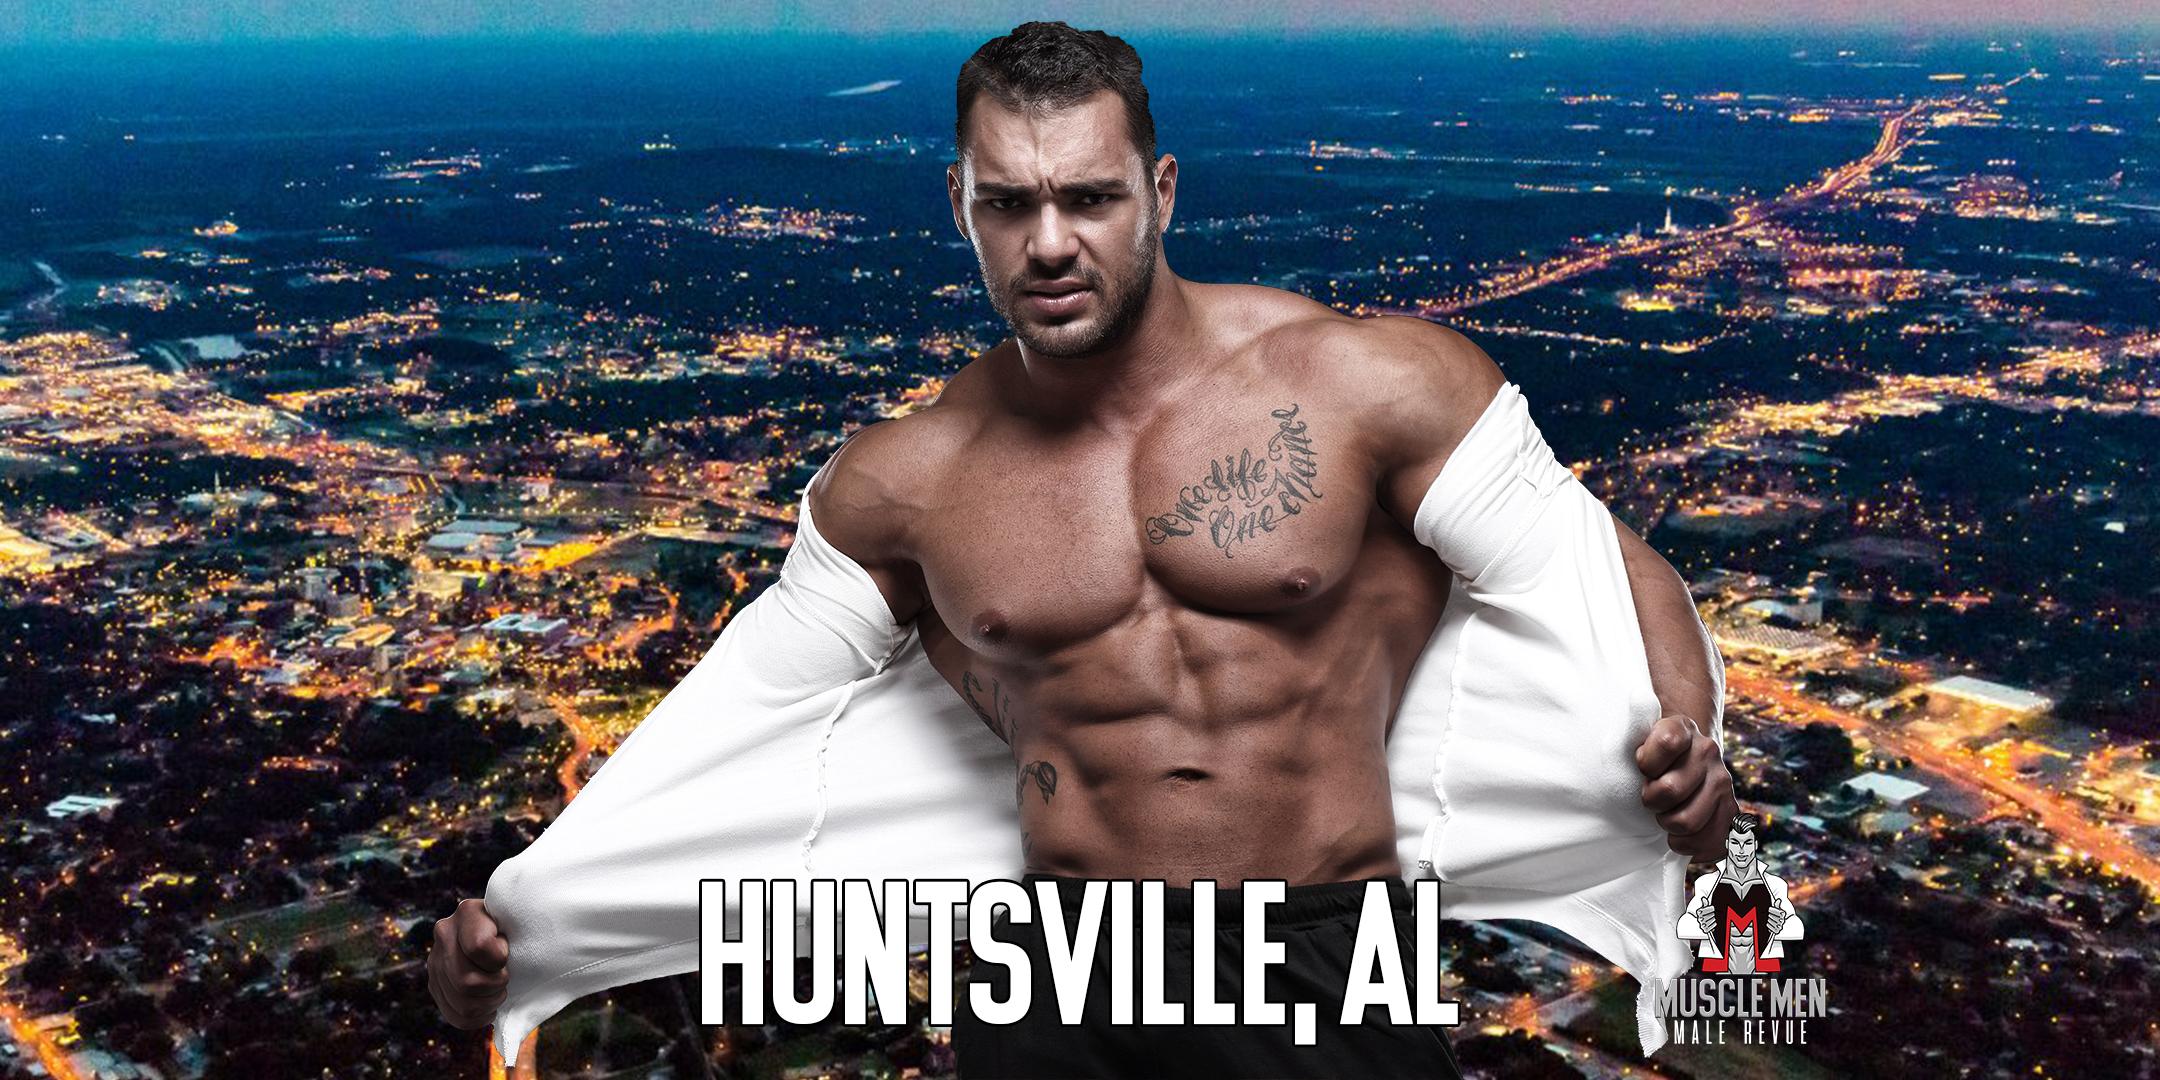 Muscle Men Male Strippers Revue And Male Strip Club Shows Huntsville Al 8 Pm 10 Pm 19 Sep 2020